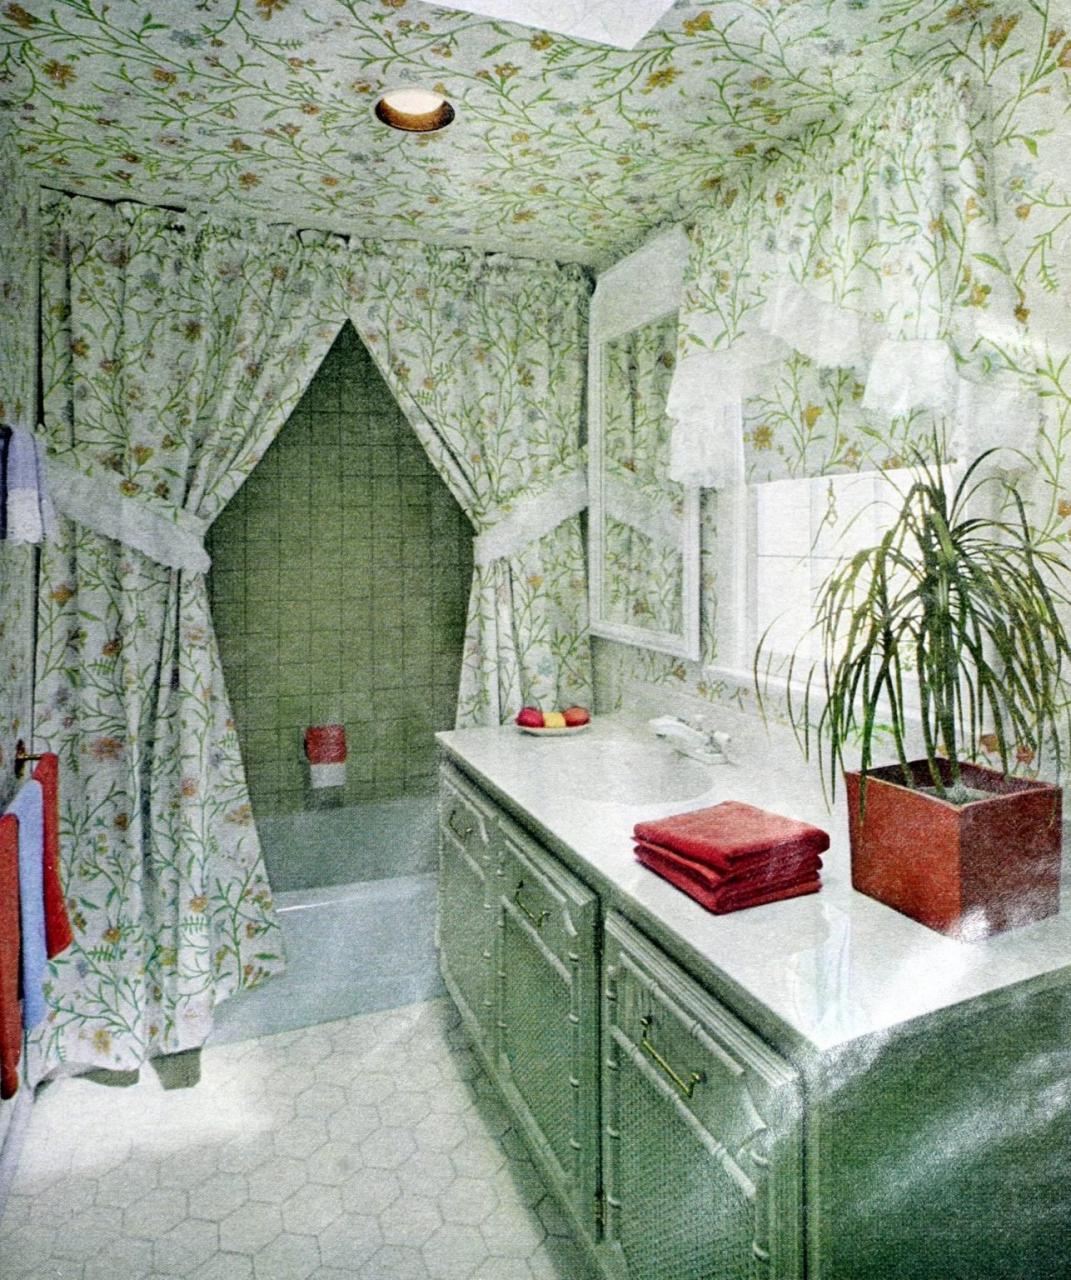 1980s bathroom decor & color schemes for that real retro look Click